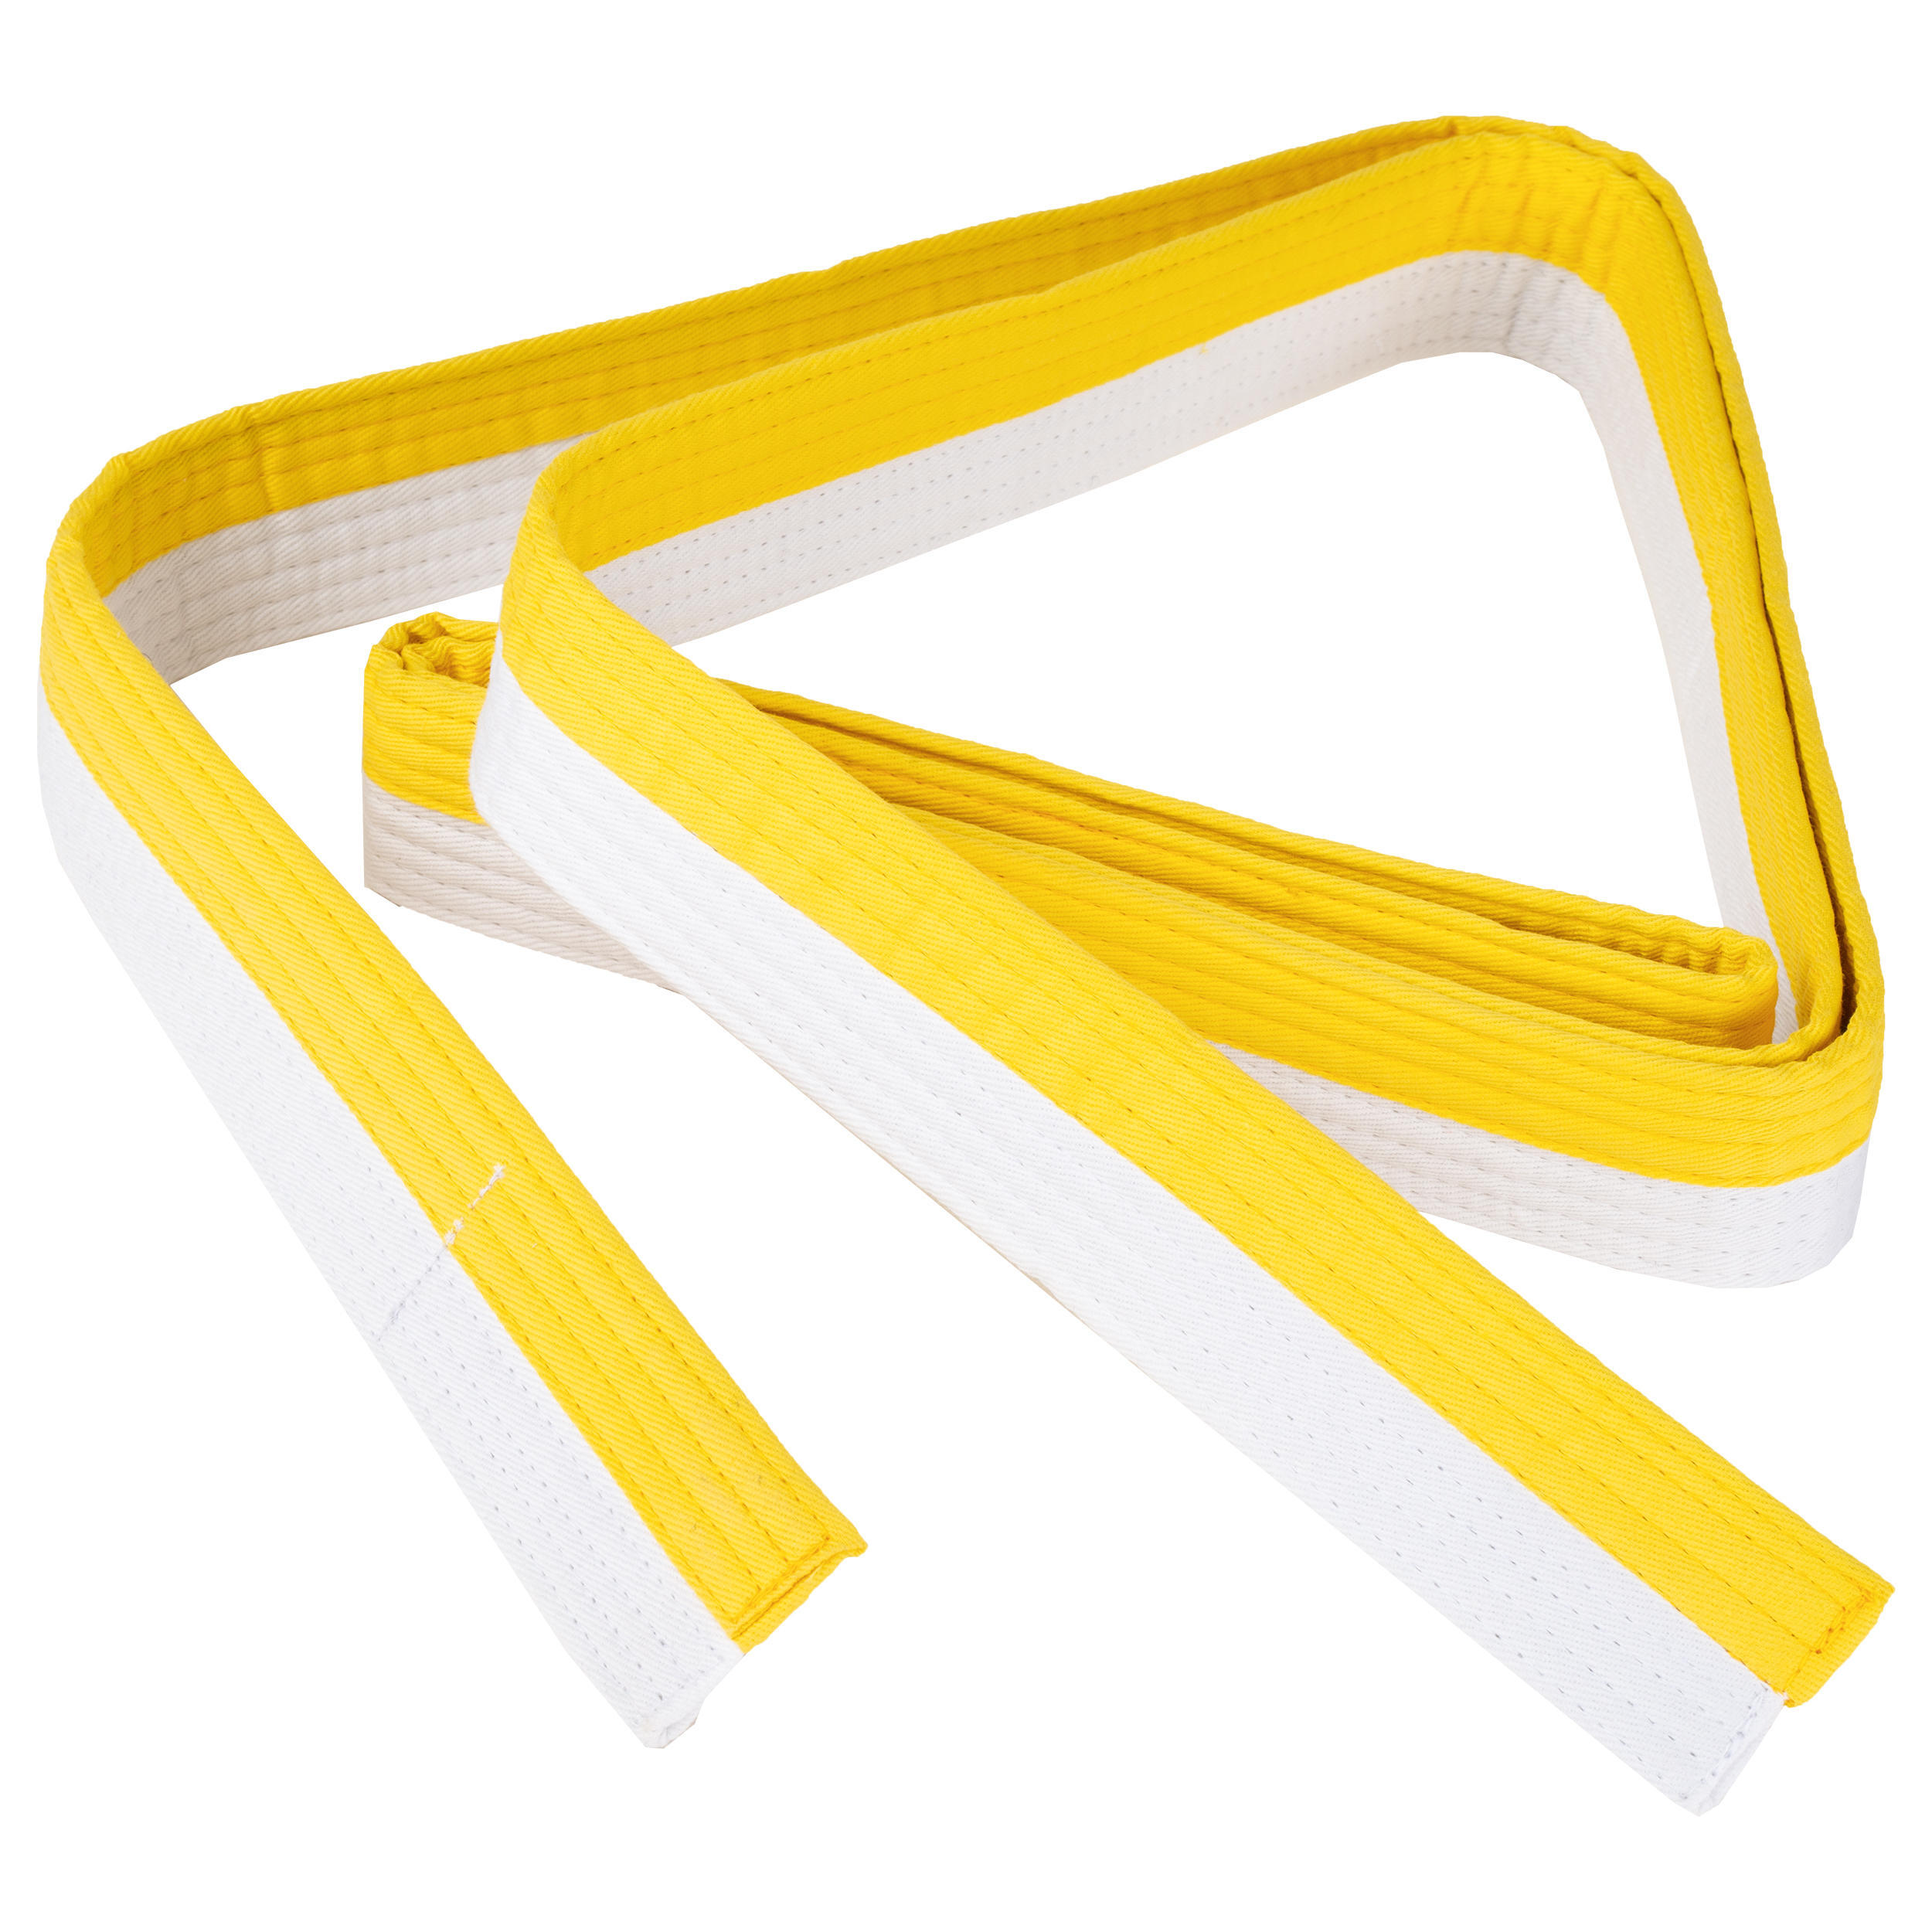 Пояс для единоборств 2,5 м бело-желтый OUTSHOCK, белый/солнечно-желтый пояса для единоборств adidas пояс для единоборств adidas club желтый